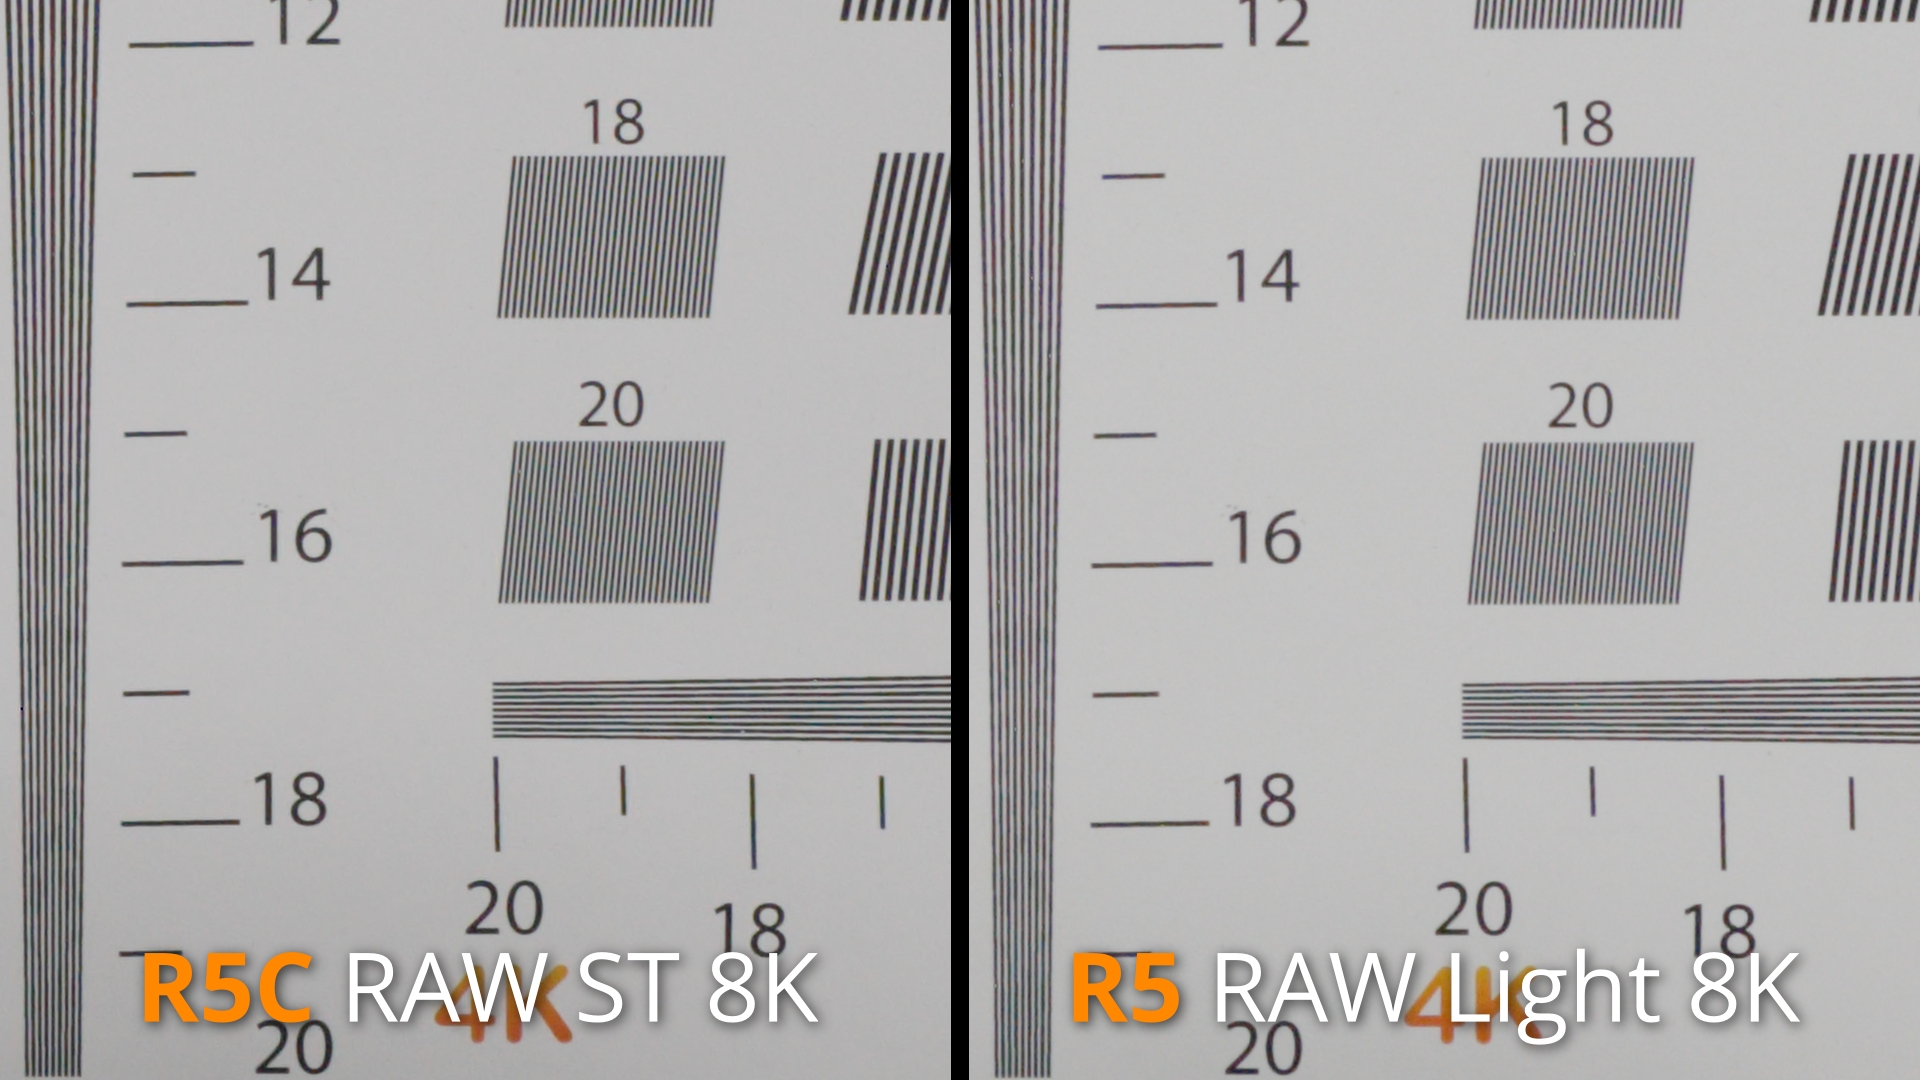 R5C RAW 8K Vs R5 RAW 8K Mires Zoom x3_2.4.1.jpg